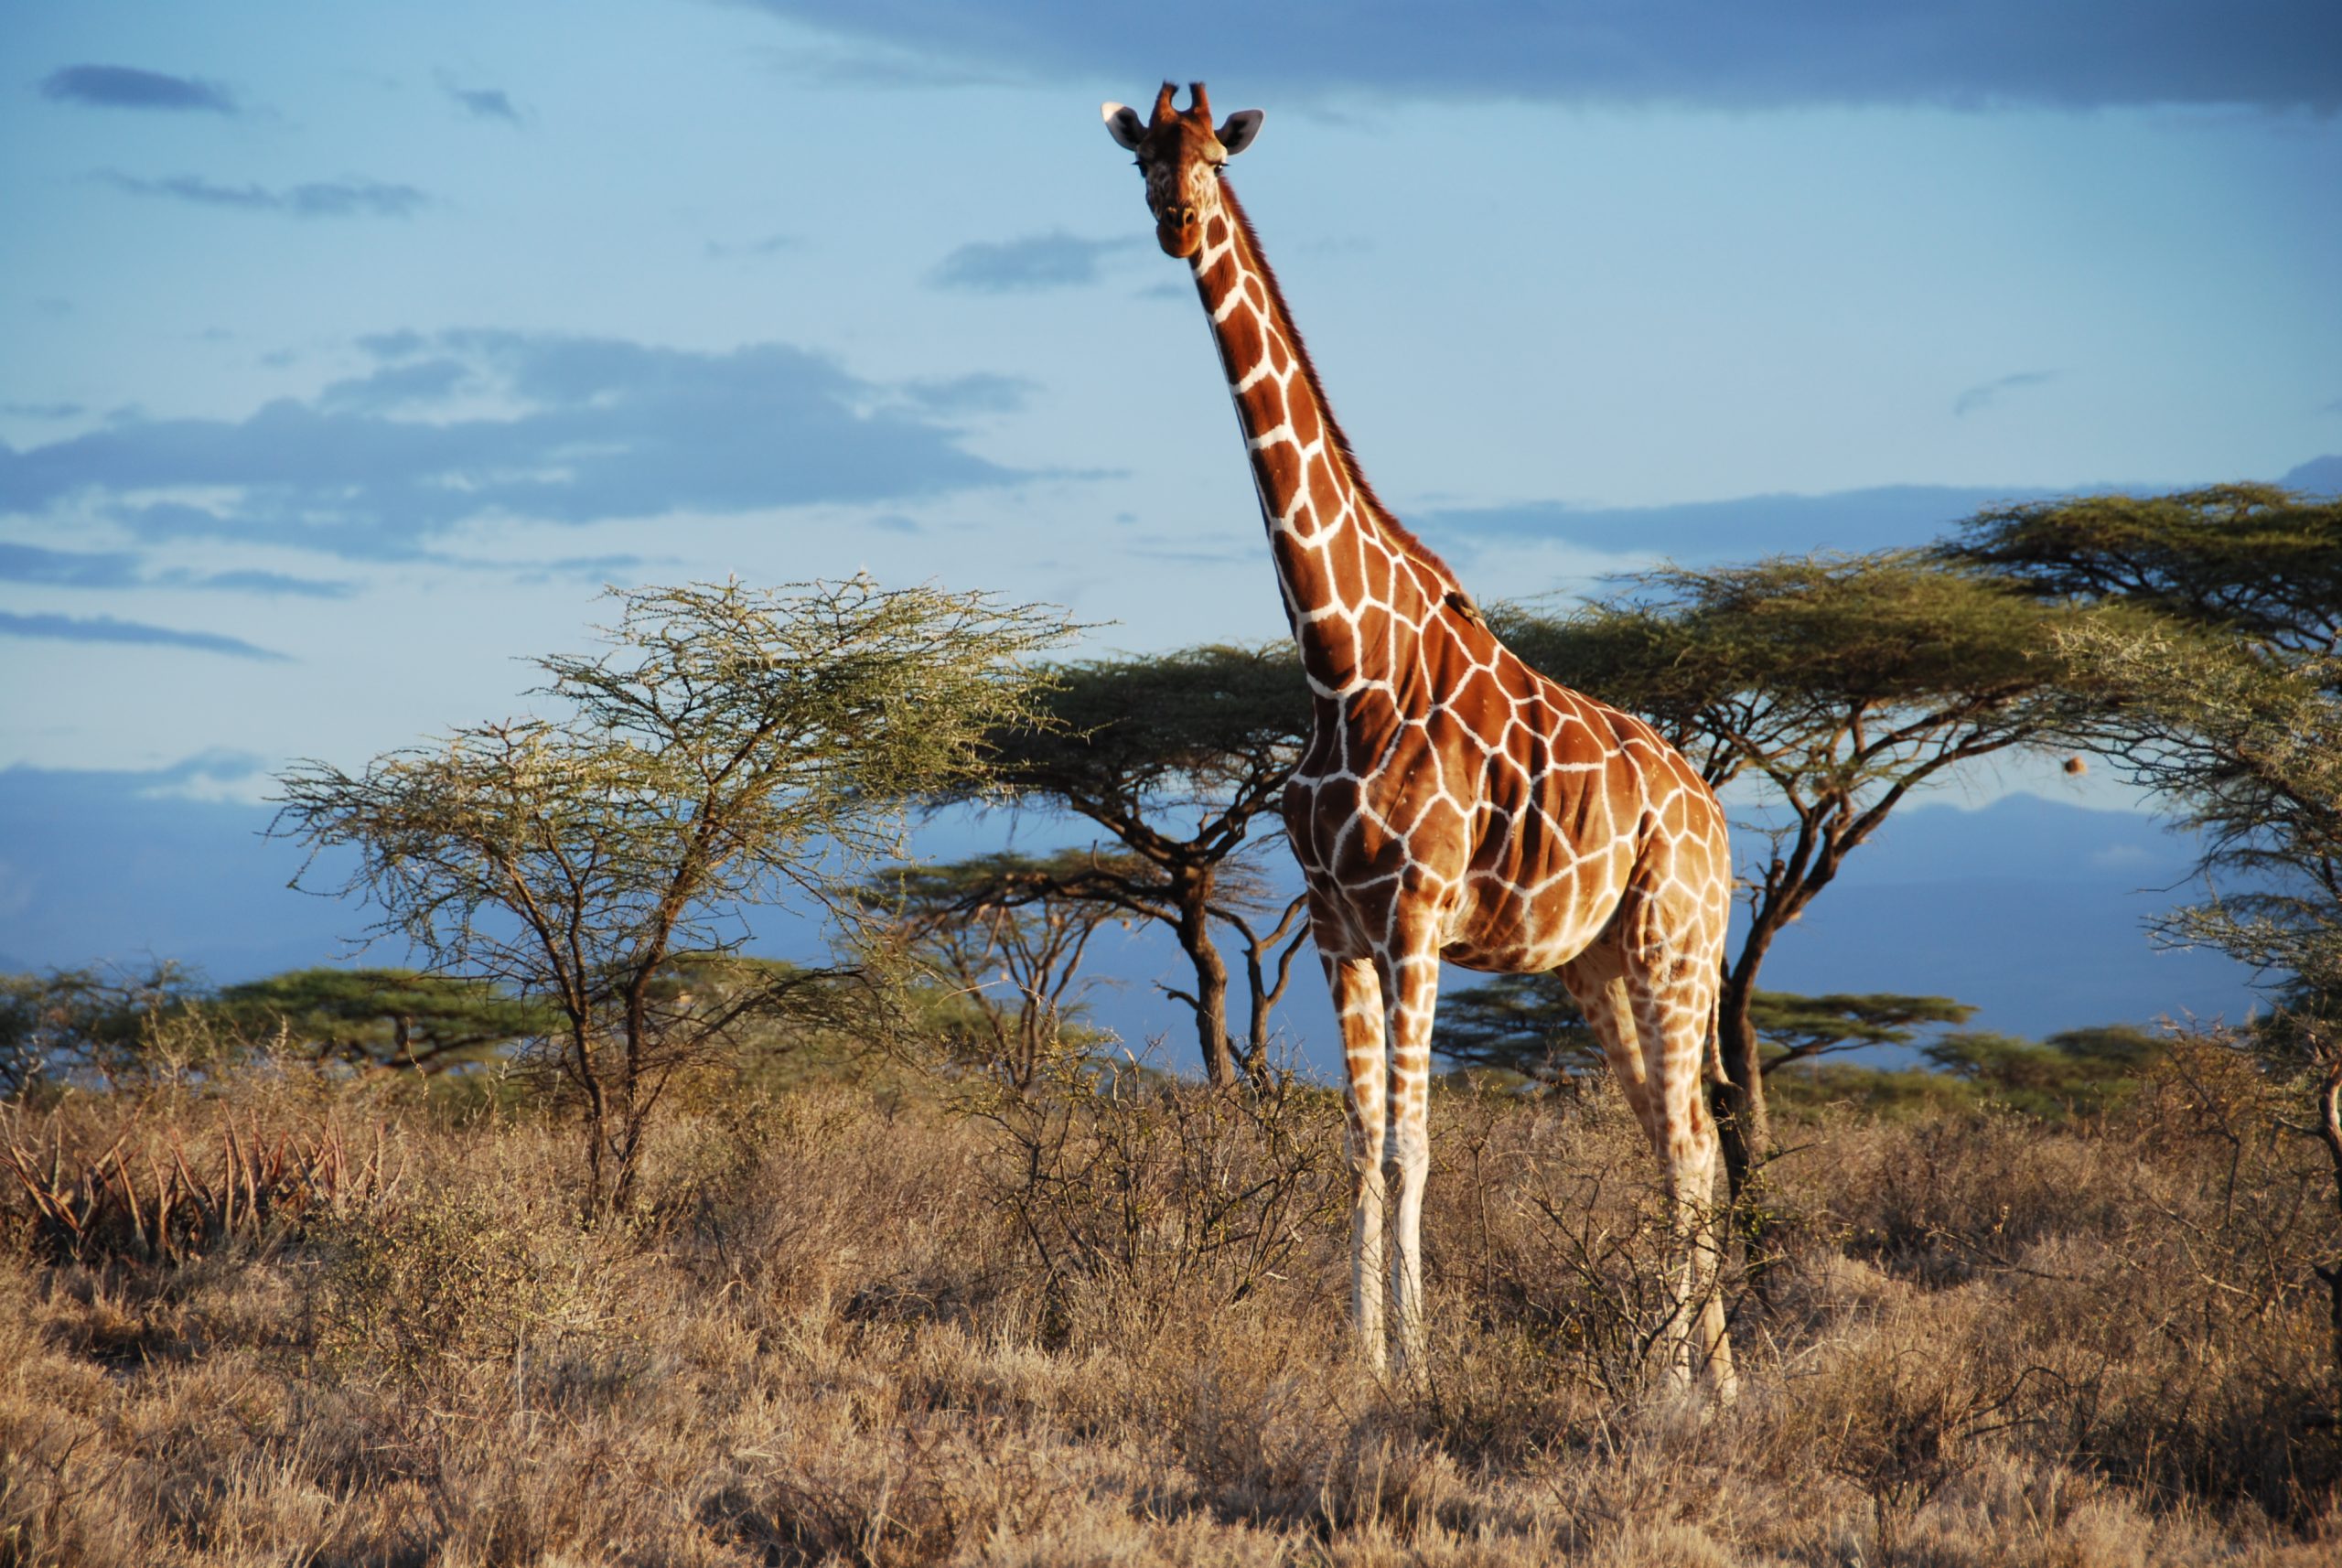 Giraffe genomics support four species